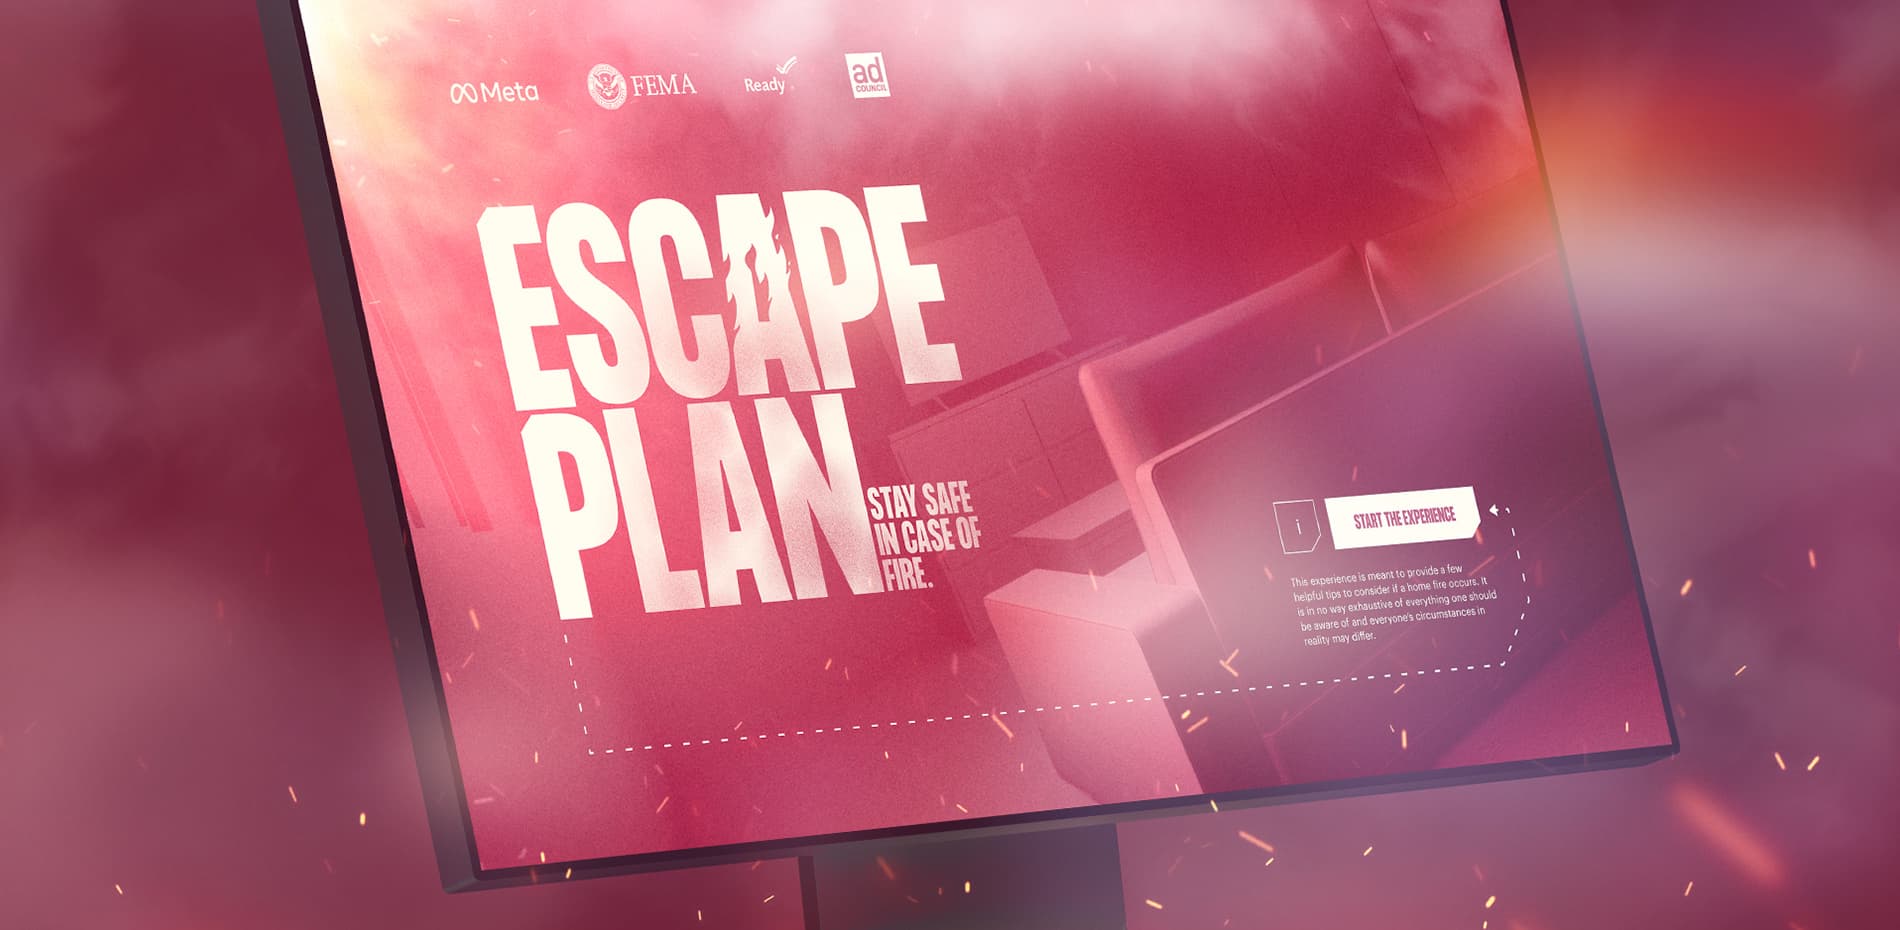 Escape plan: Virtual fire safety